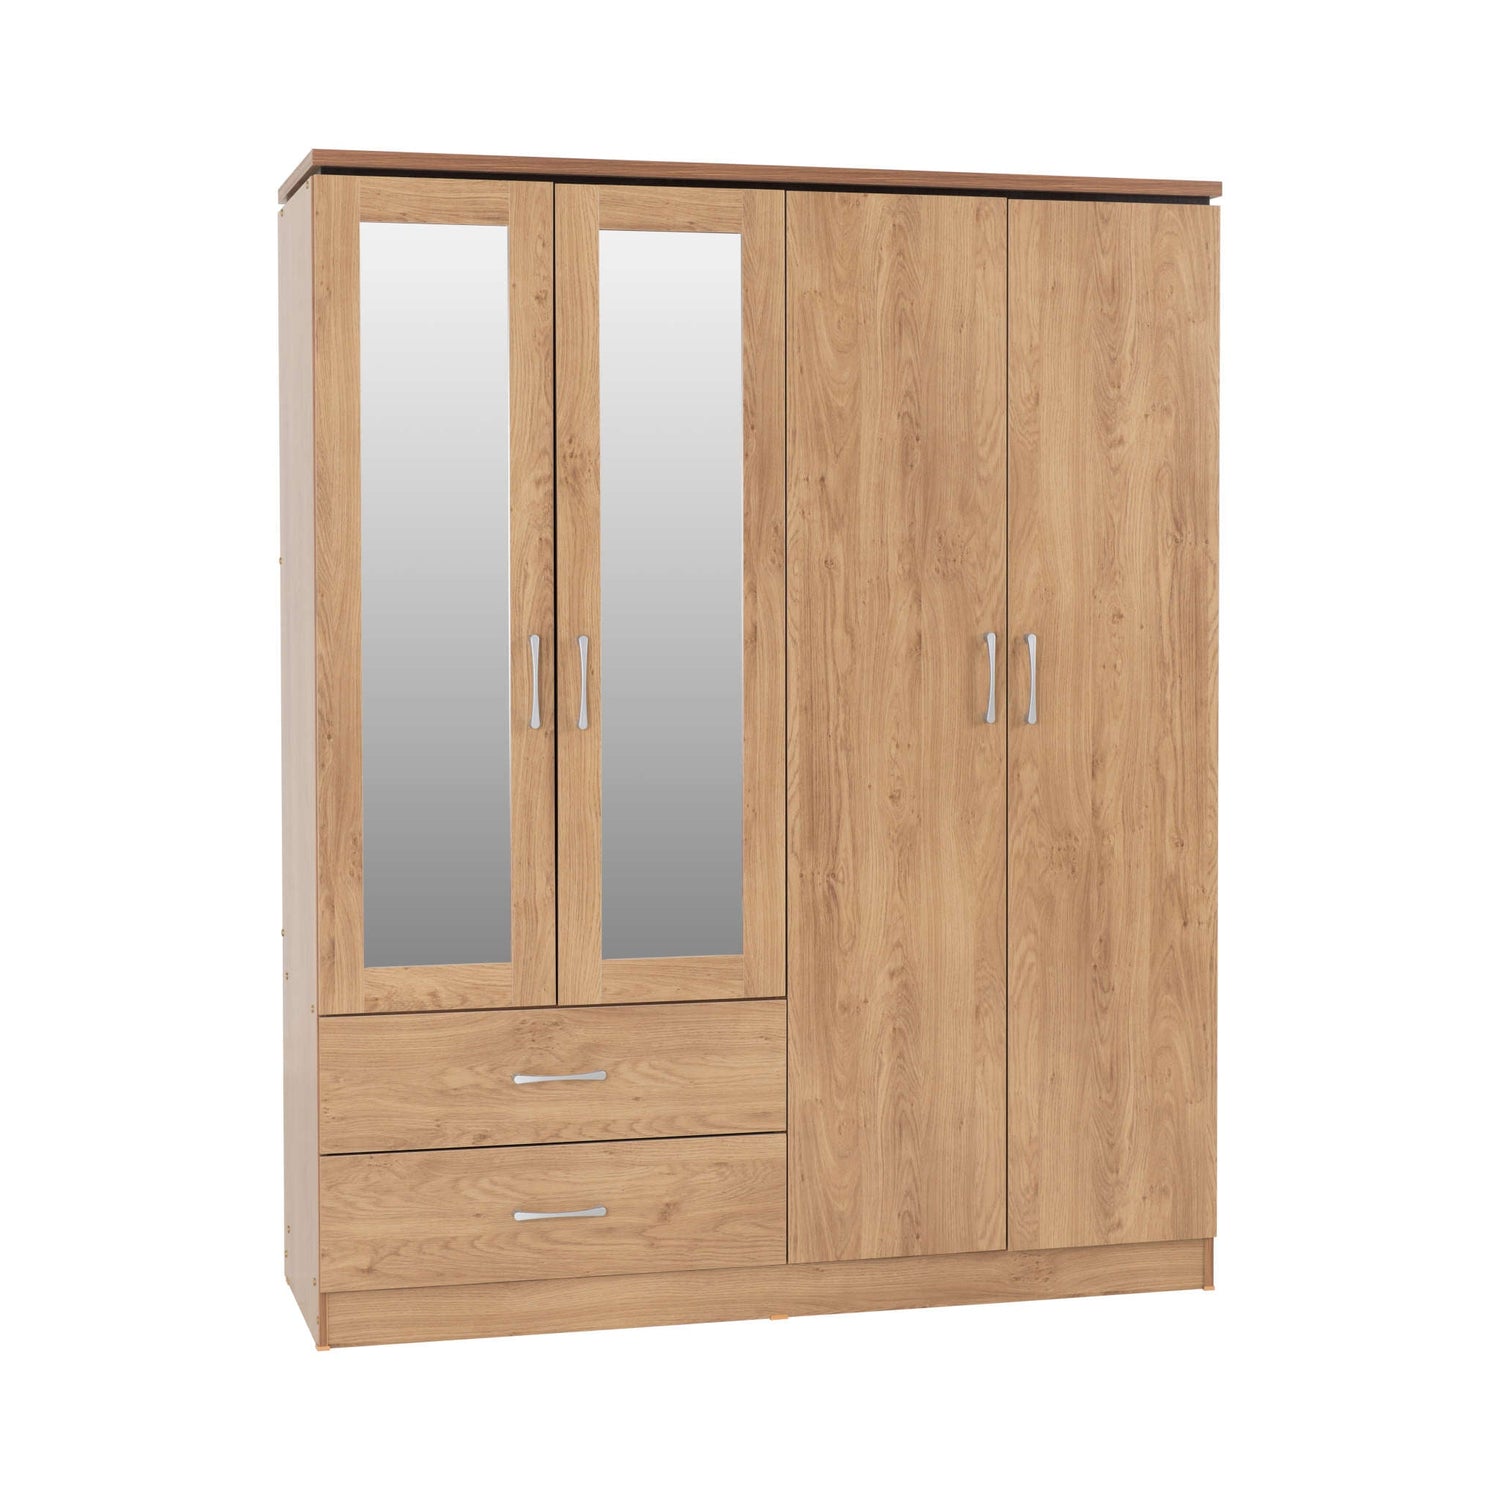 Charles 4 Door 2 Drawer Mirrored Wardrobe (Oak Effect Veneer with Walnut Trim)